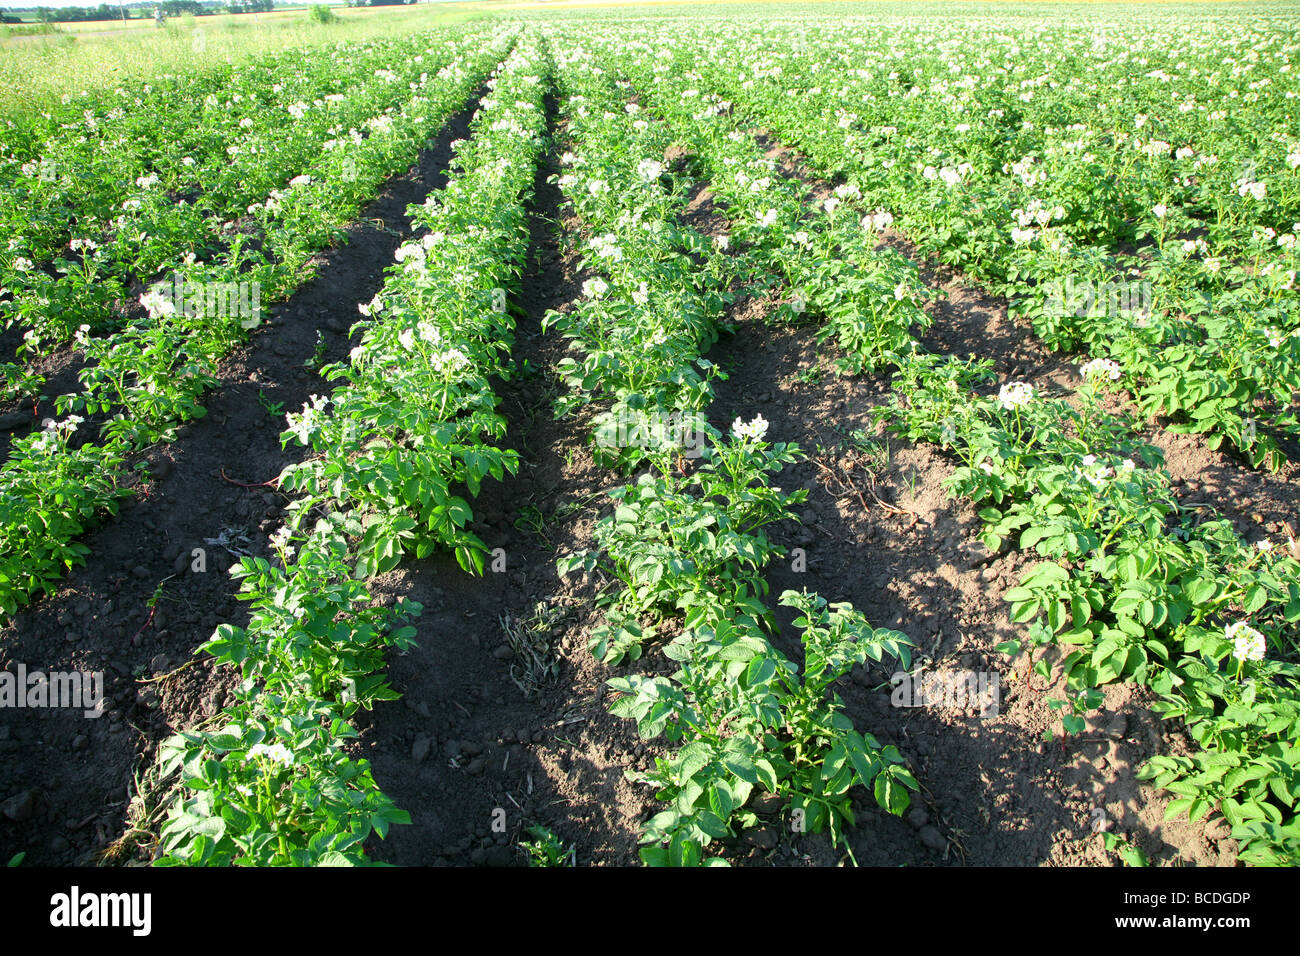 bushes of potato are in the field Stock Photo